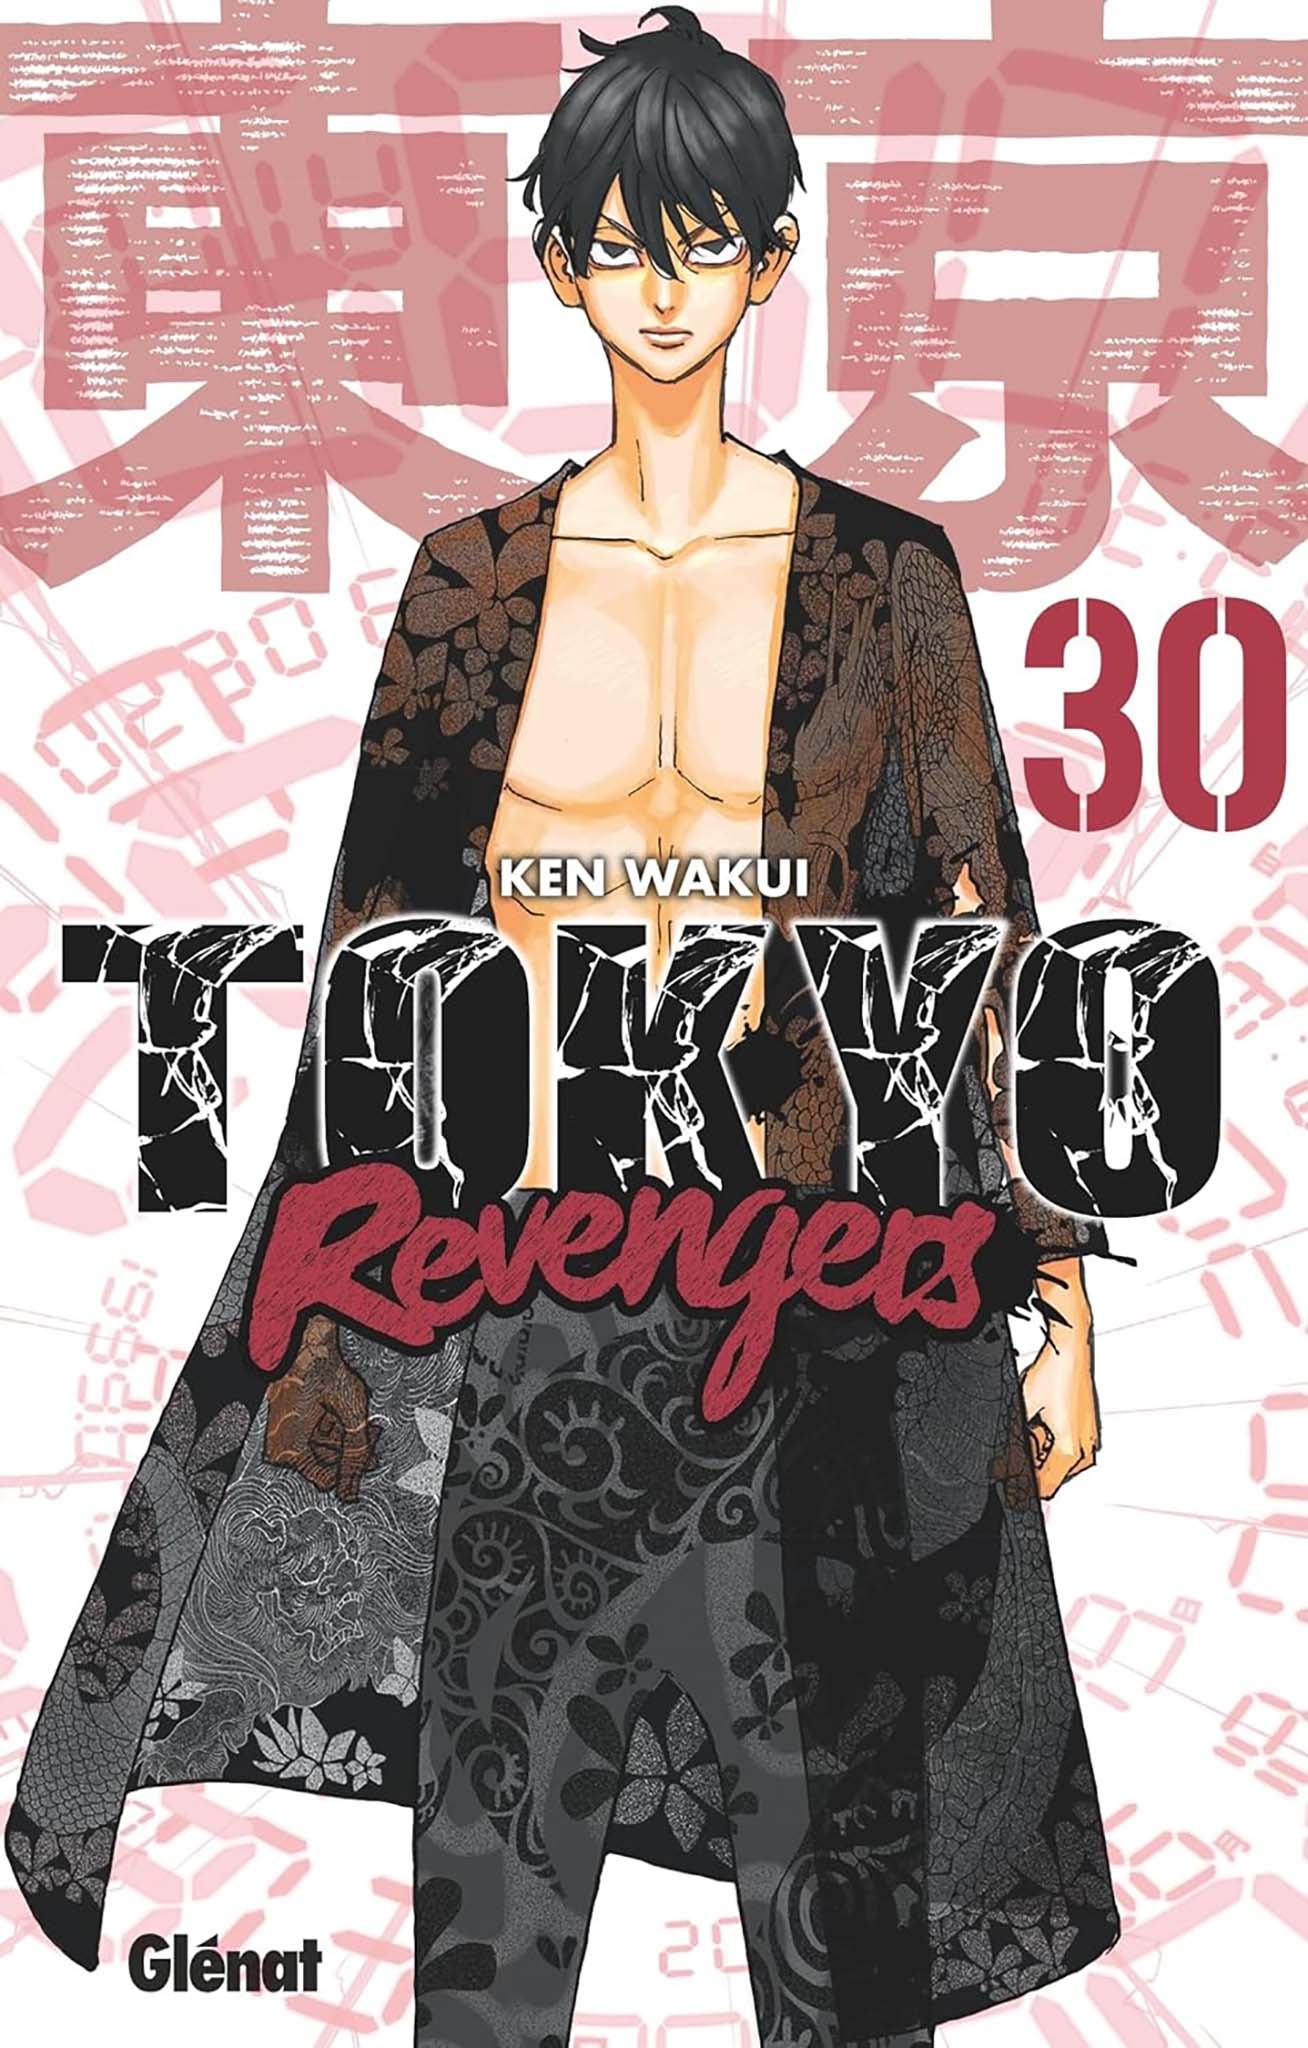 Tome 30 du manga Tokyo Revengers.